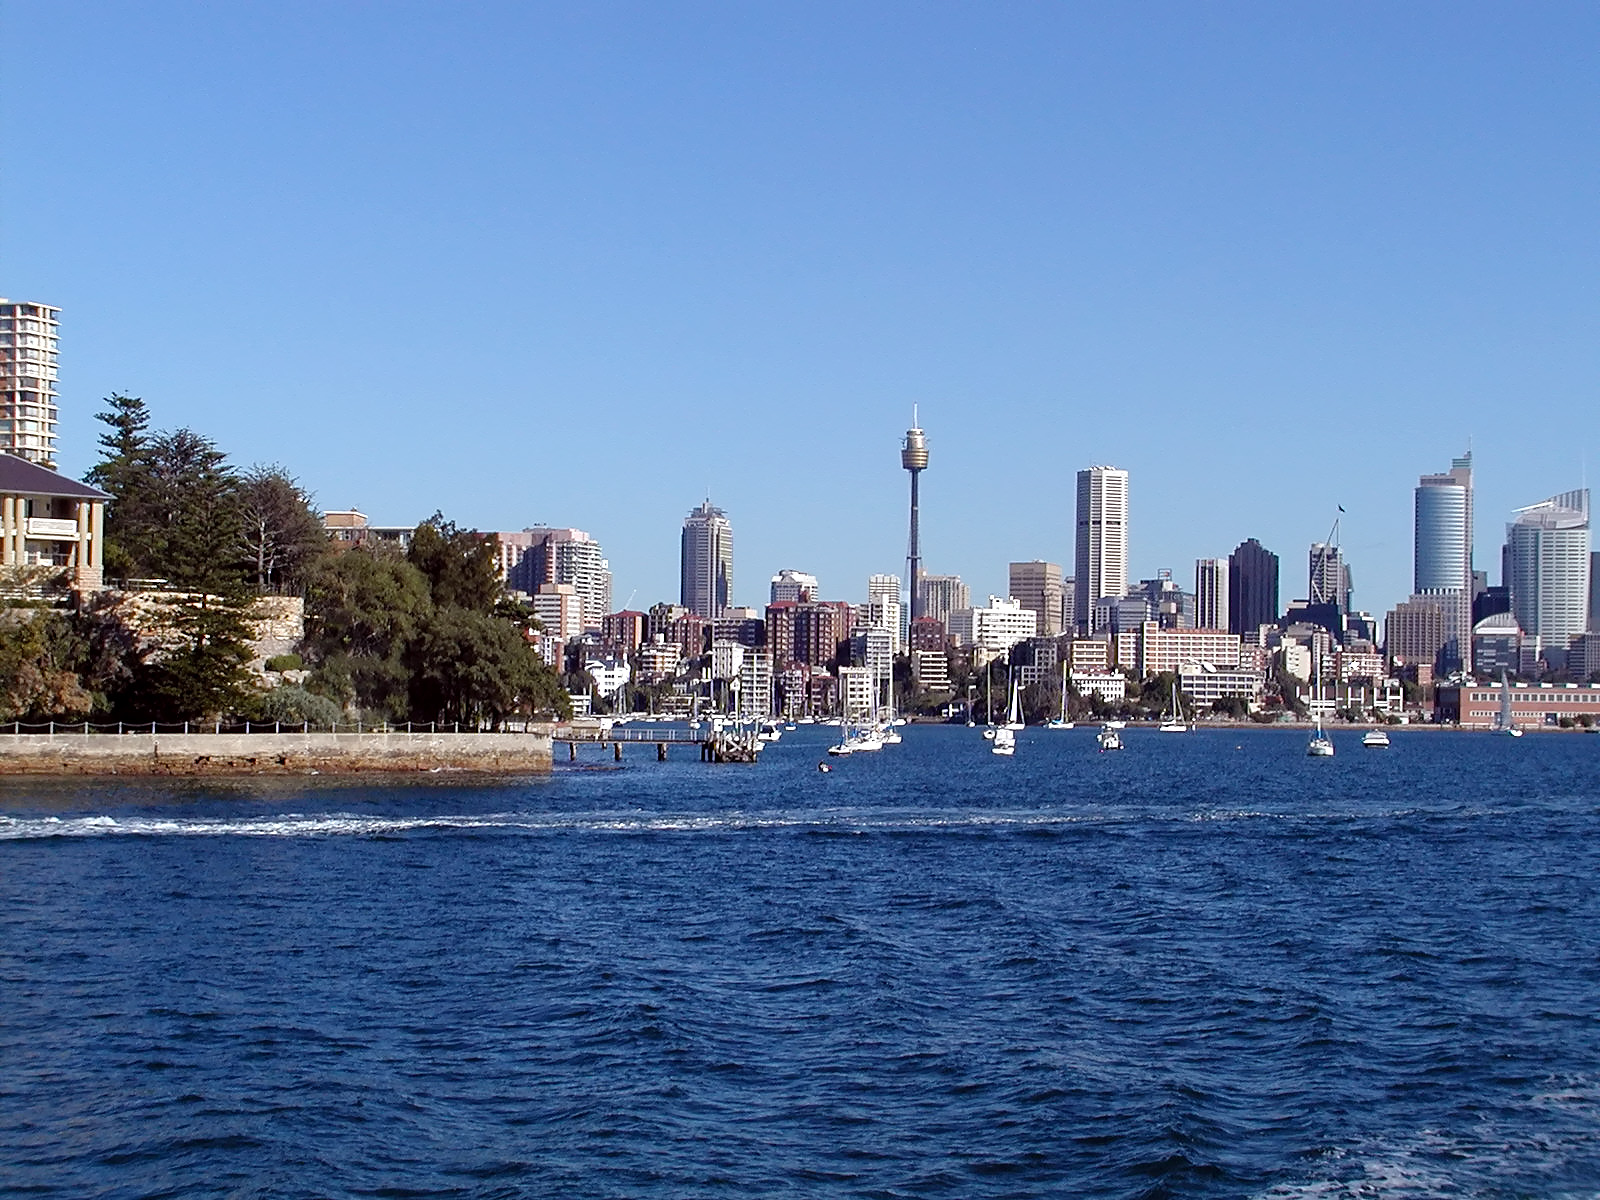 17-Jun-2001 10:20 - Sydney - The city skyline